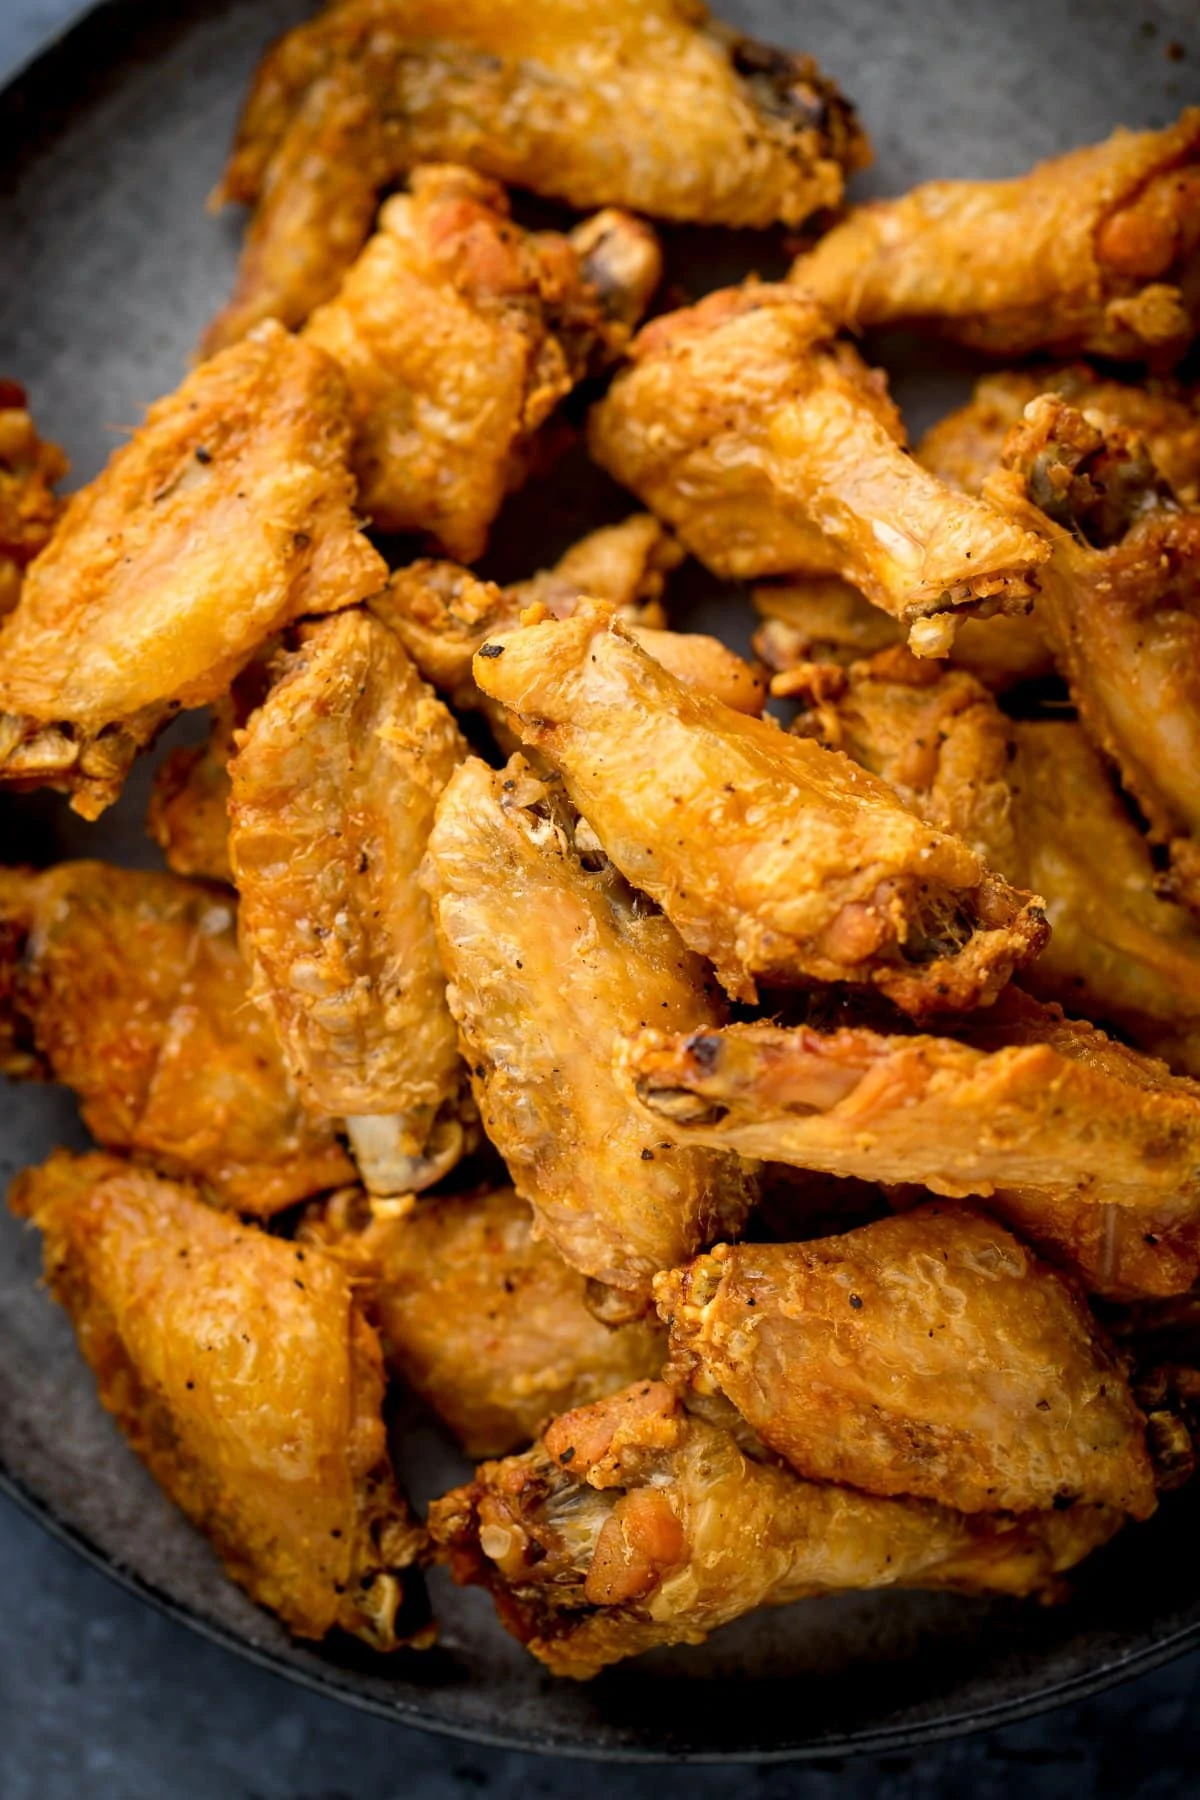 Pile of crispy chicken wings on a dark plate.